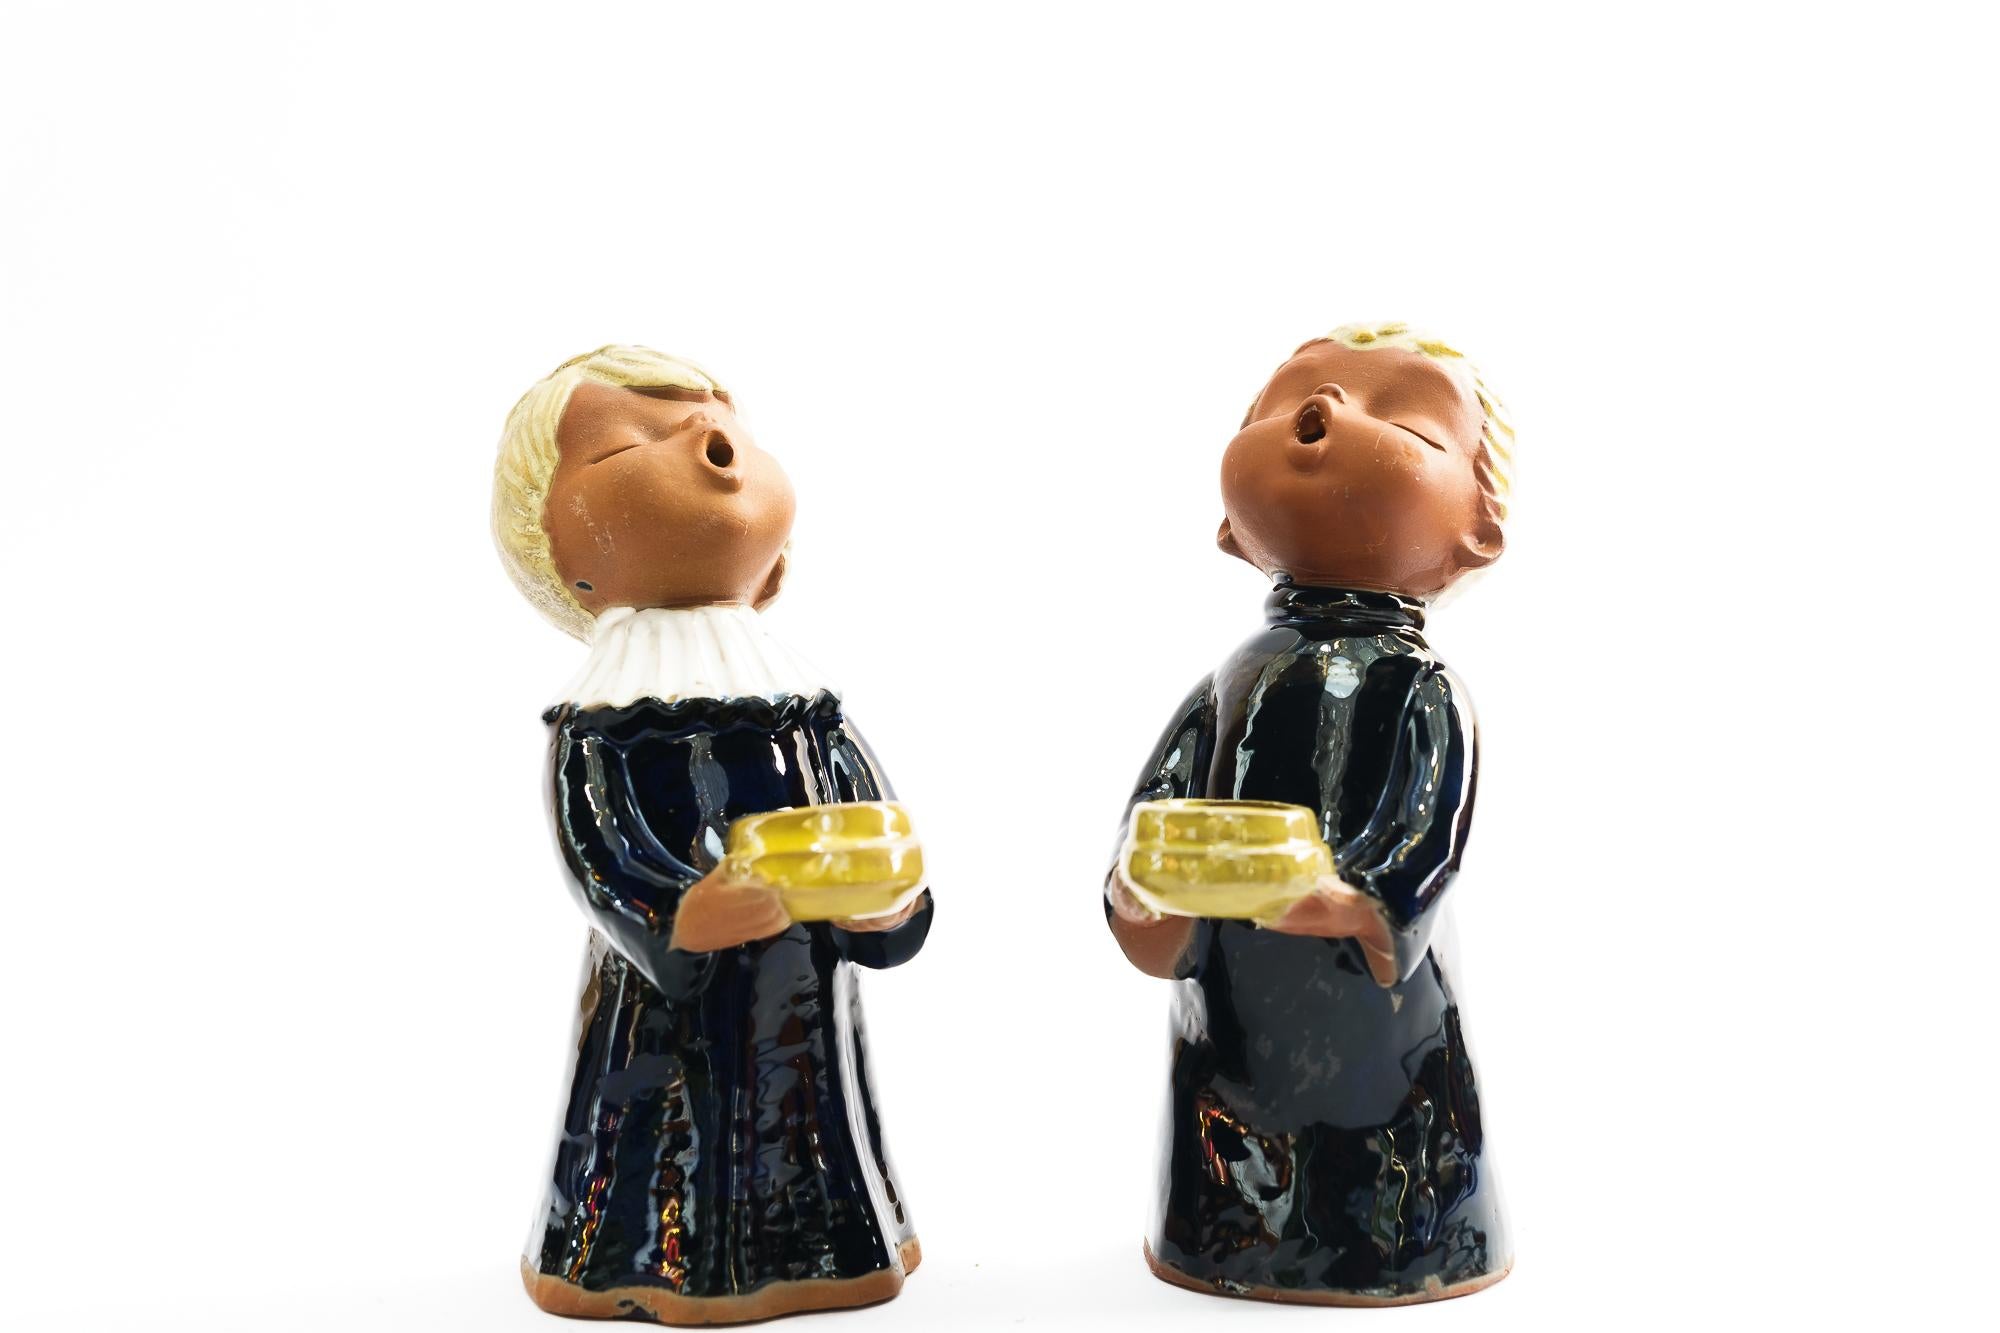 2 Candle sticks ceramic figurine ( Angels ) Vienna around 1950s
Original condition